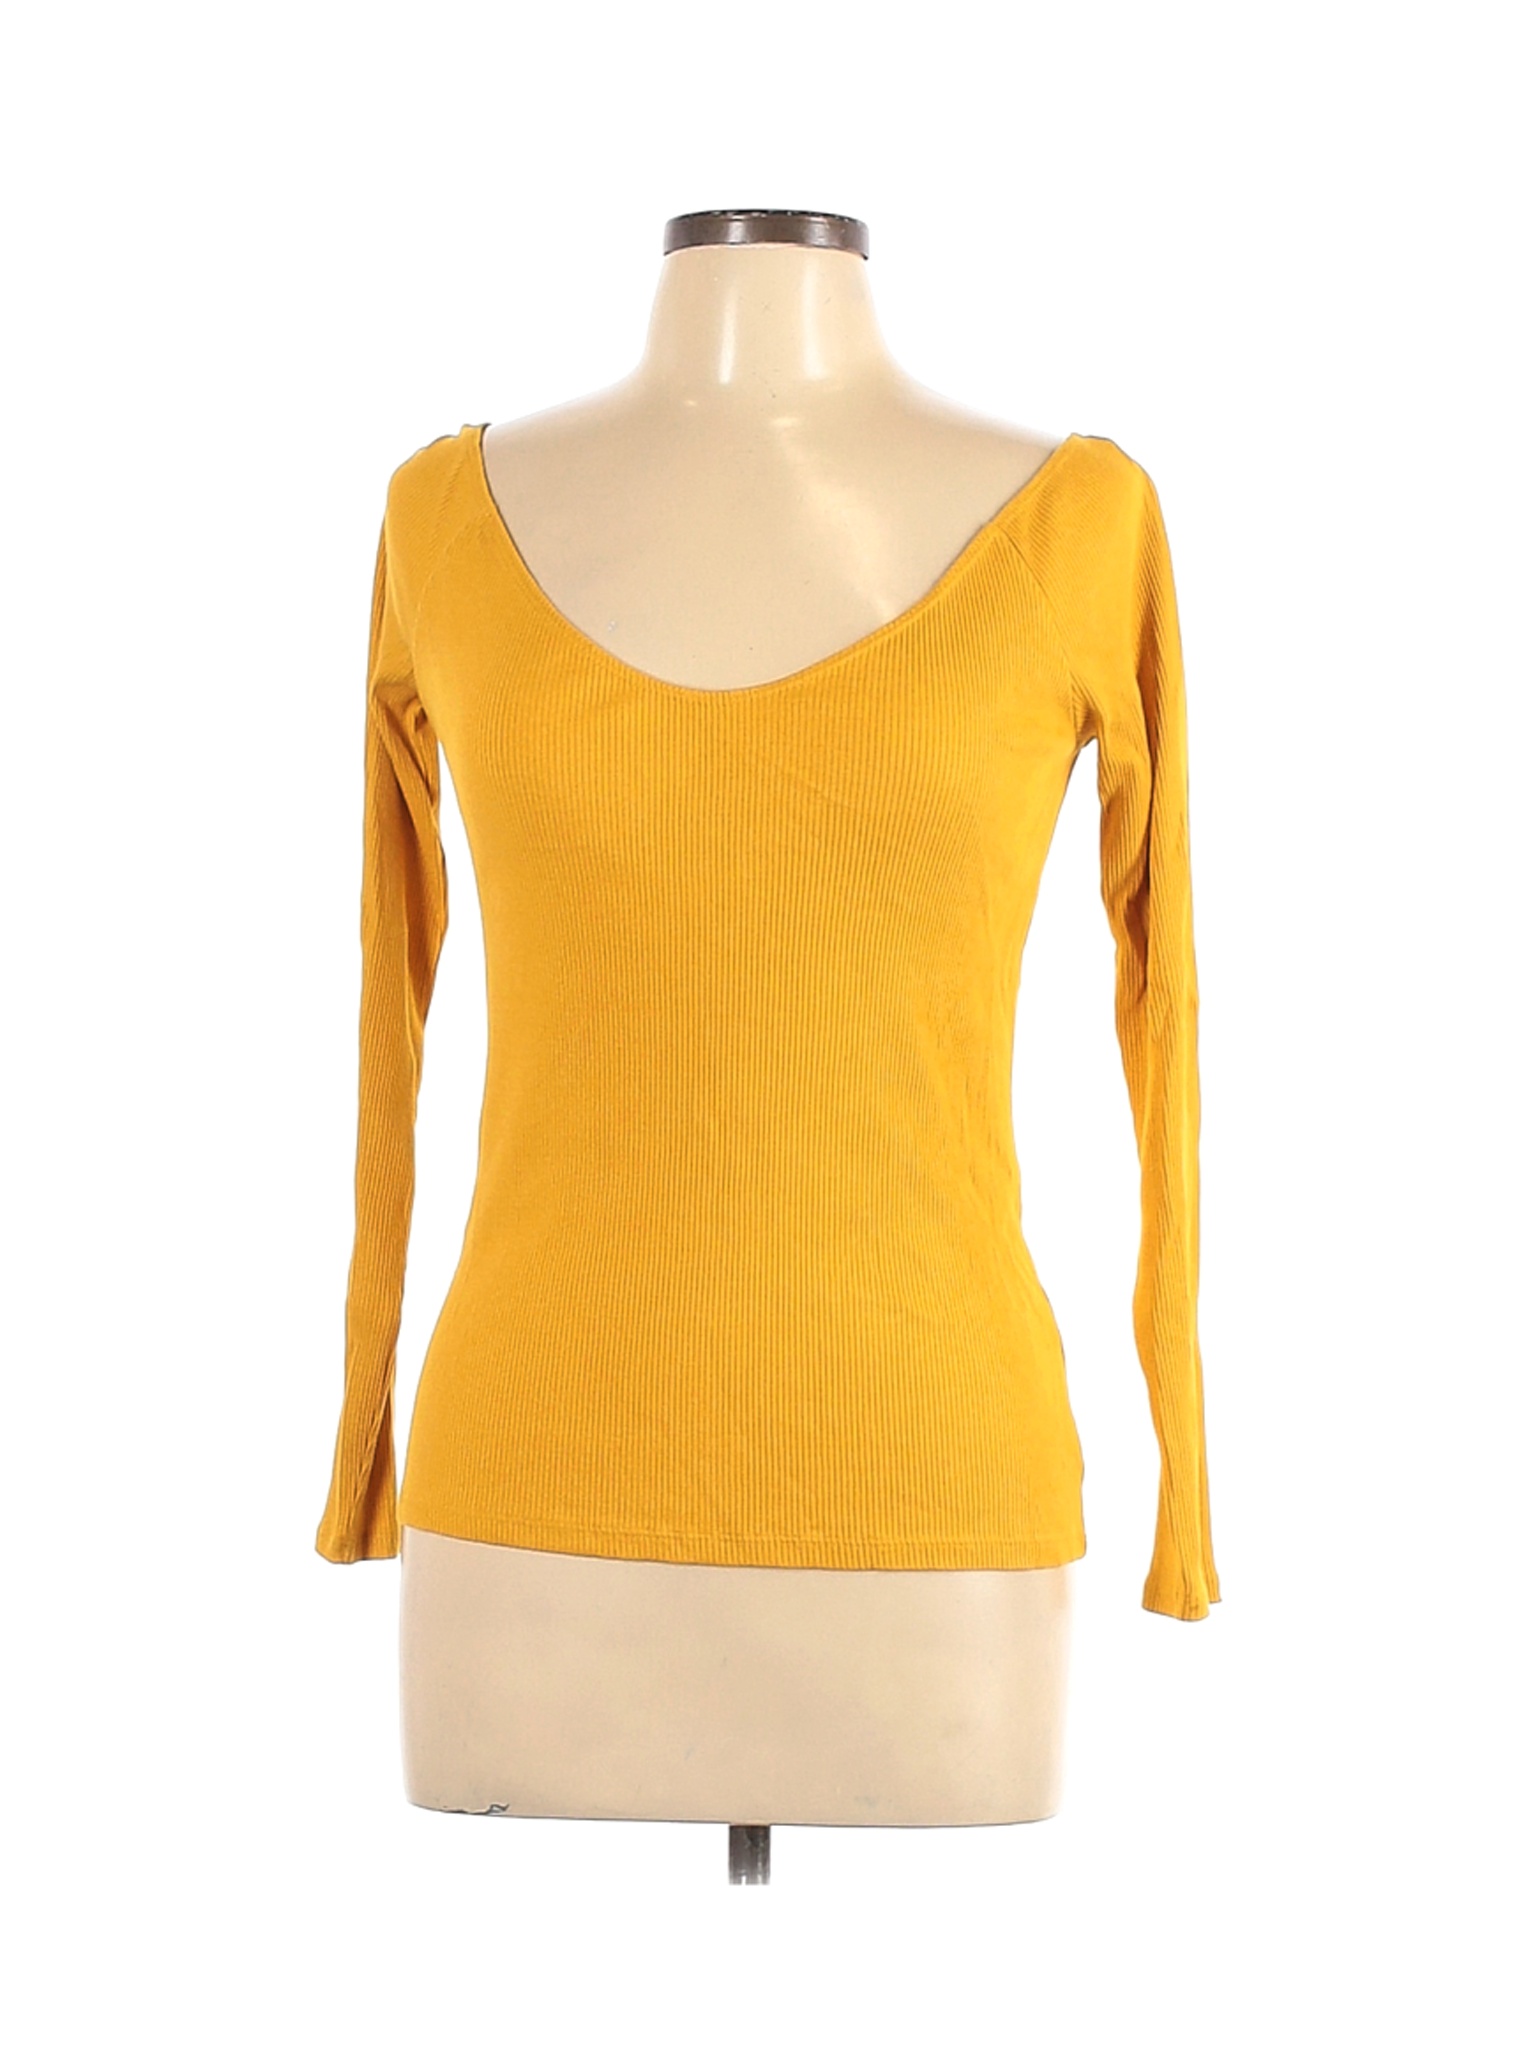 NWT Express Women Yellow Long Sleeve T-Shirt L | eBay